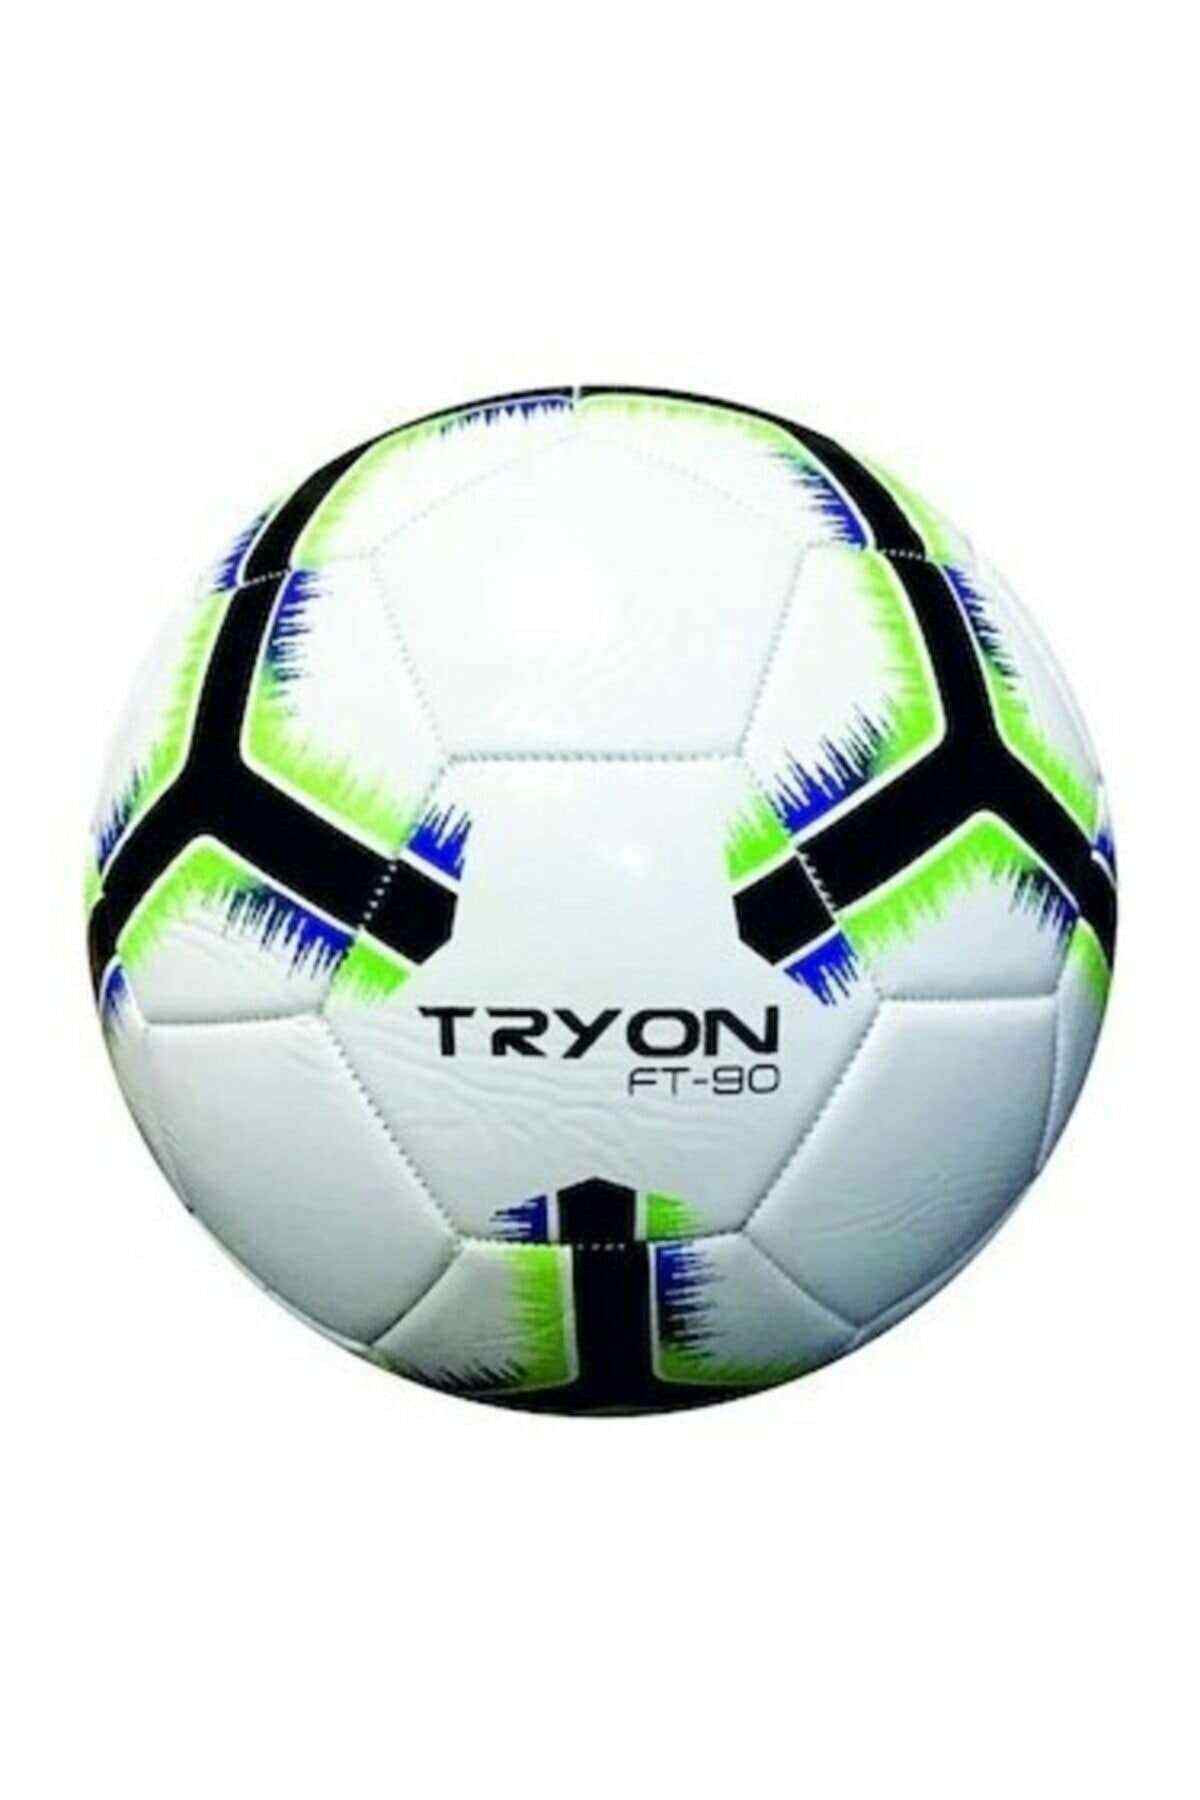 Tryon Futbol Topu Ft-90 No:5